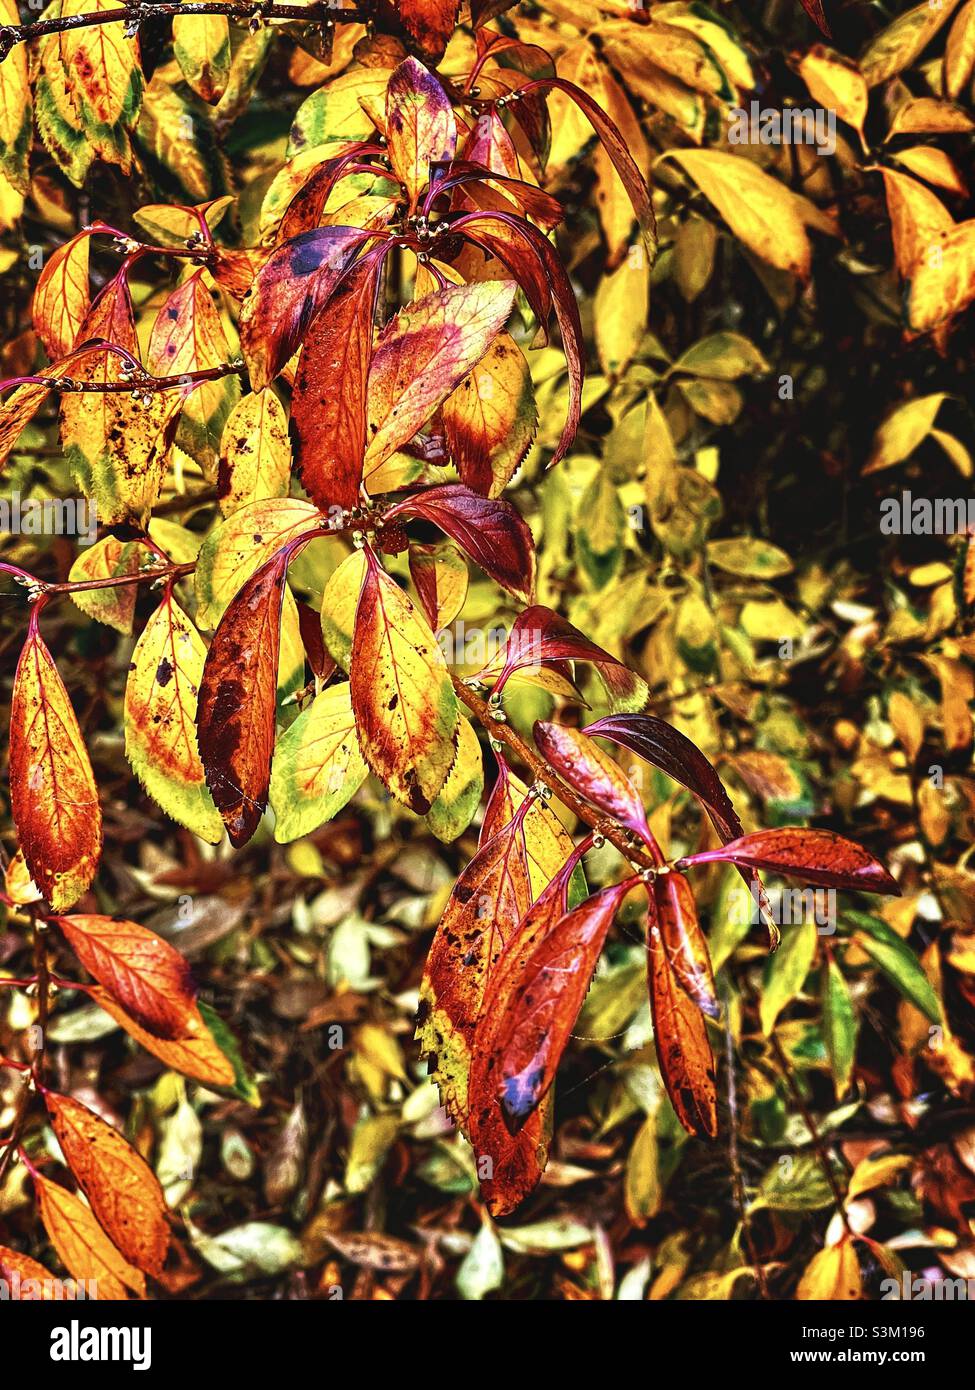 Forsythia plant with autumn season leaf color change. Stock Photo